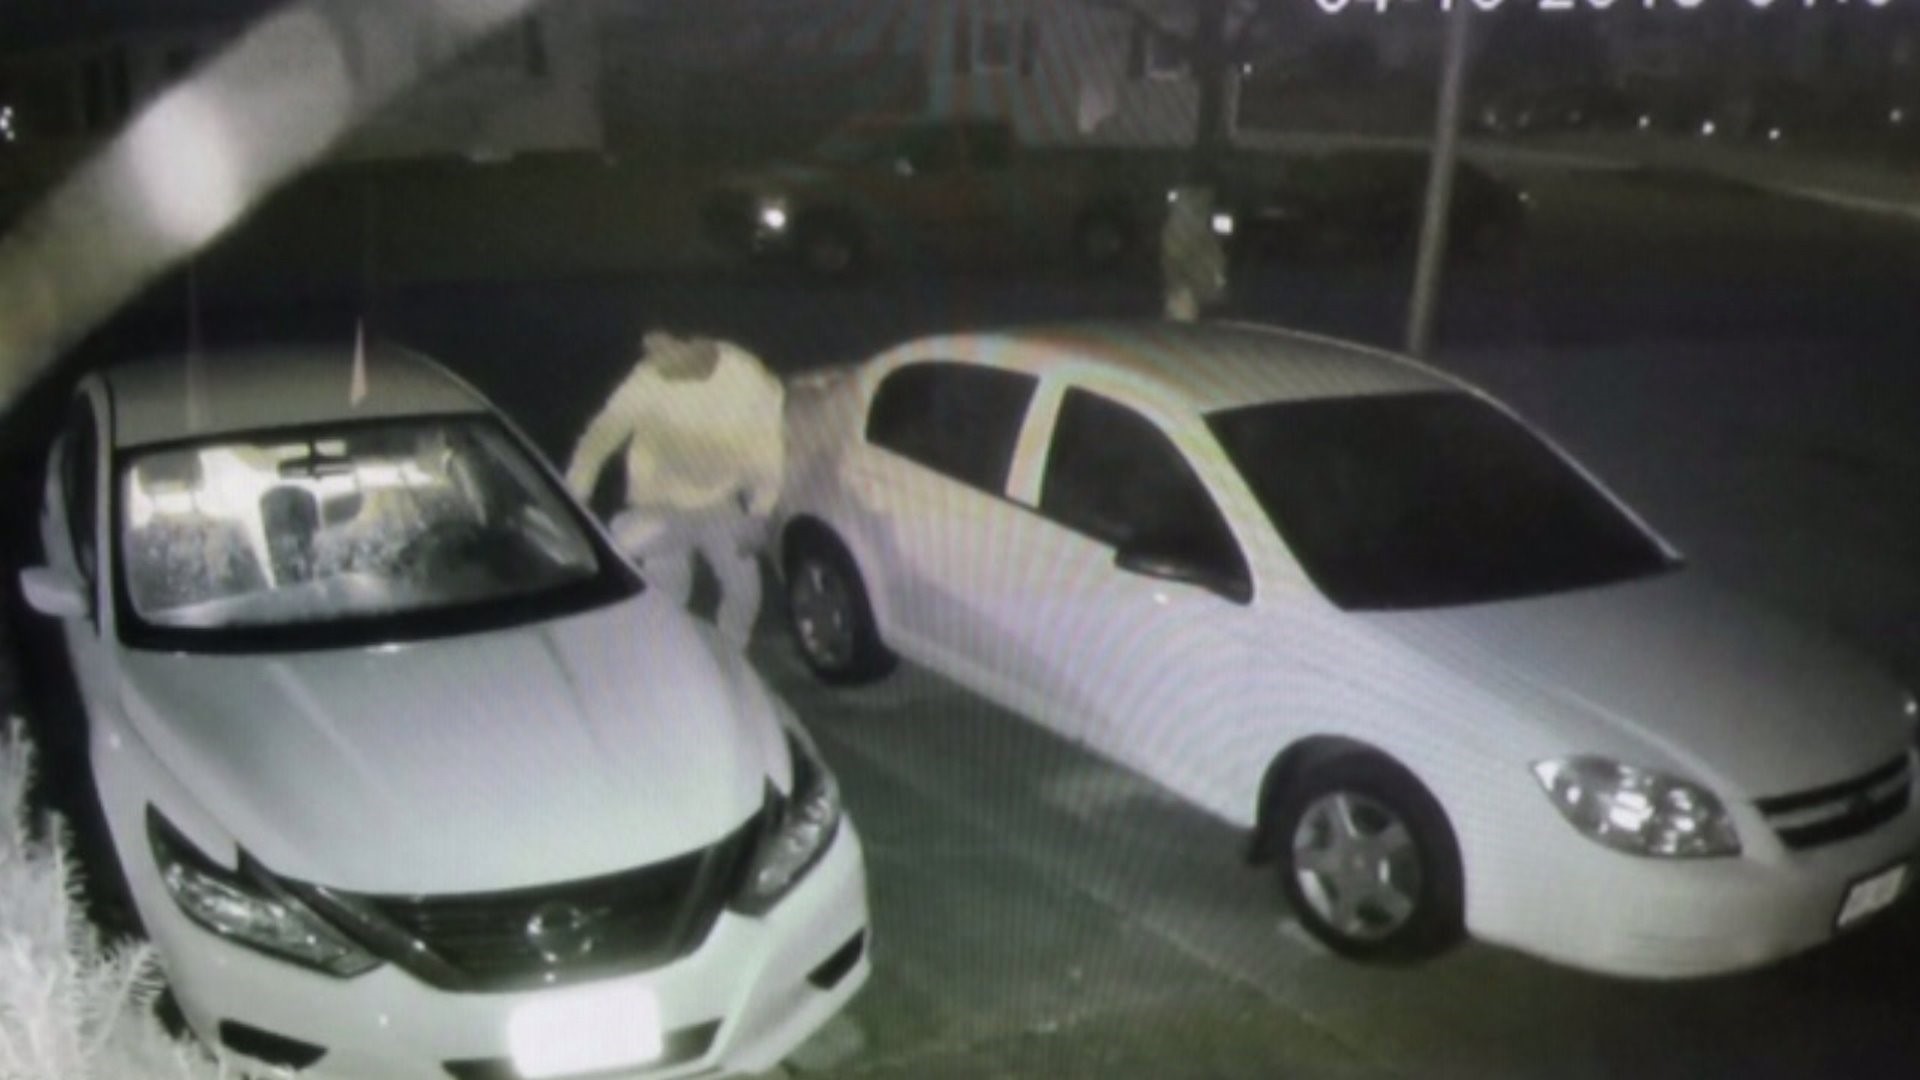 Home burglary leads to car theft